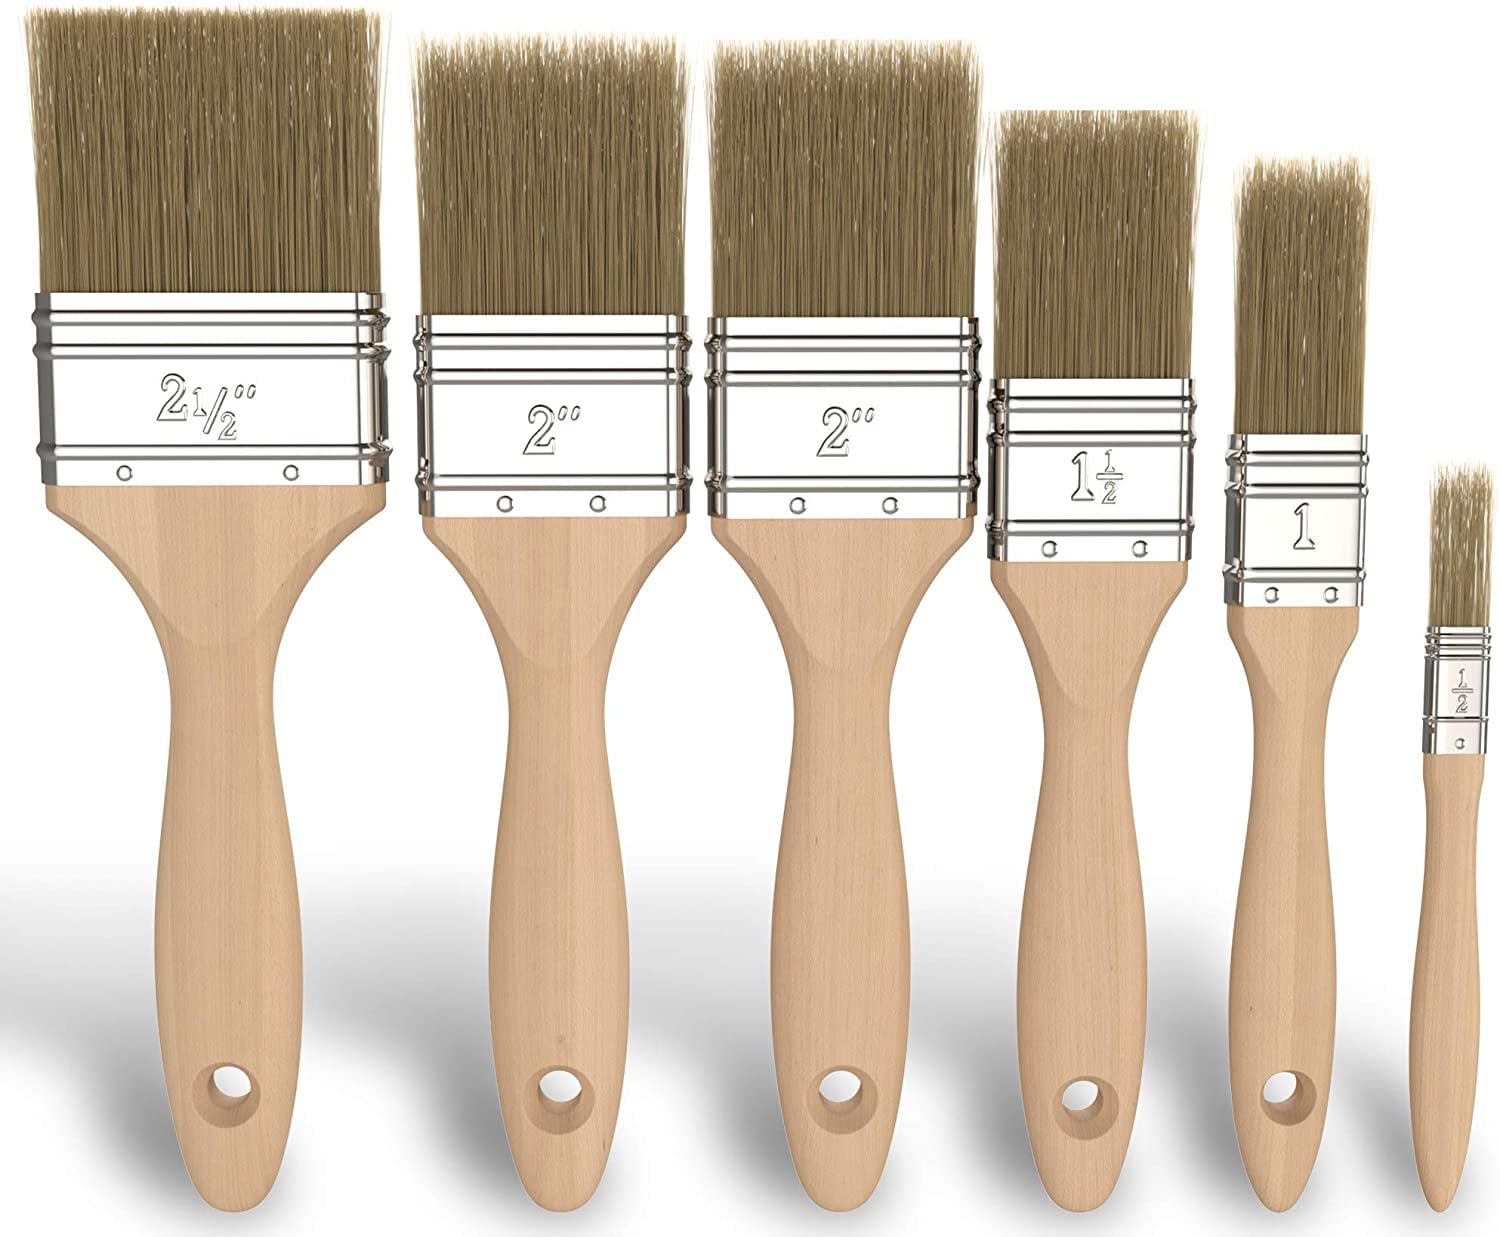 3. 10Pcs Nail Art Painting Brushes Set - wide 8